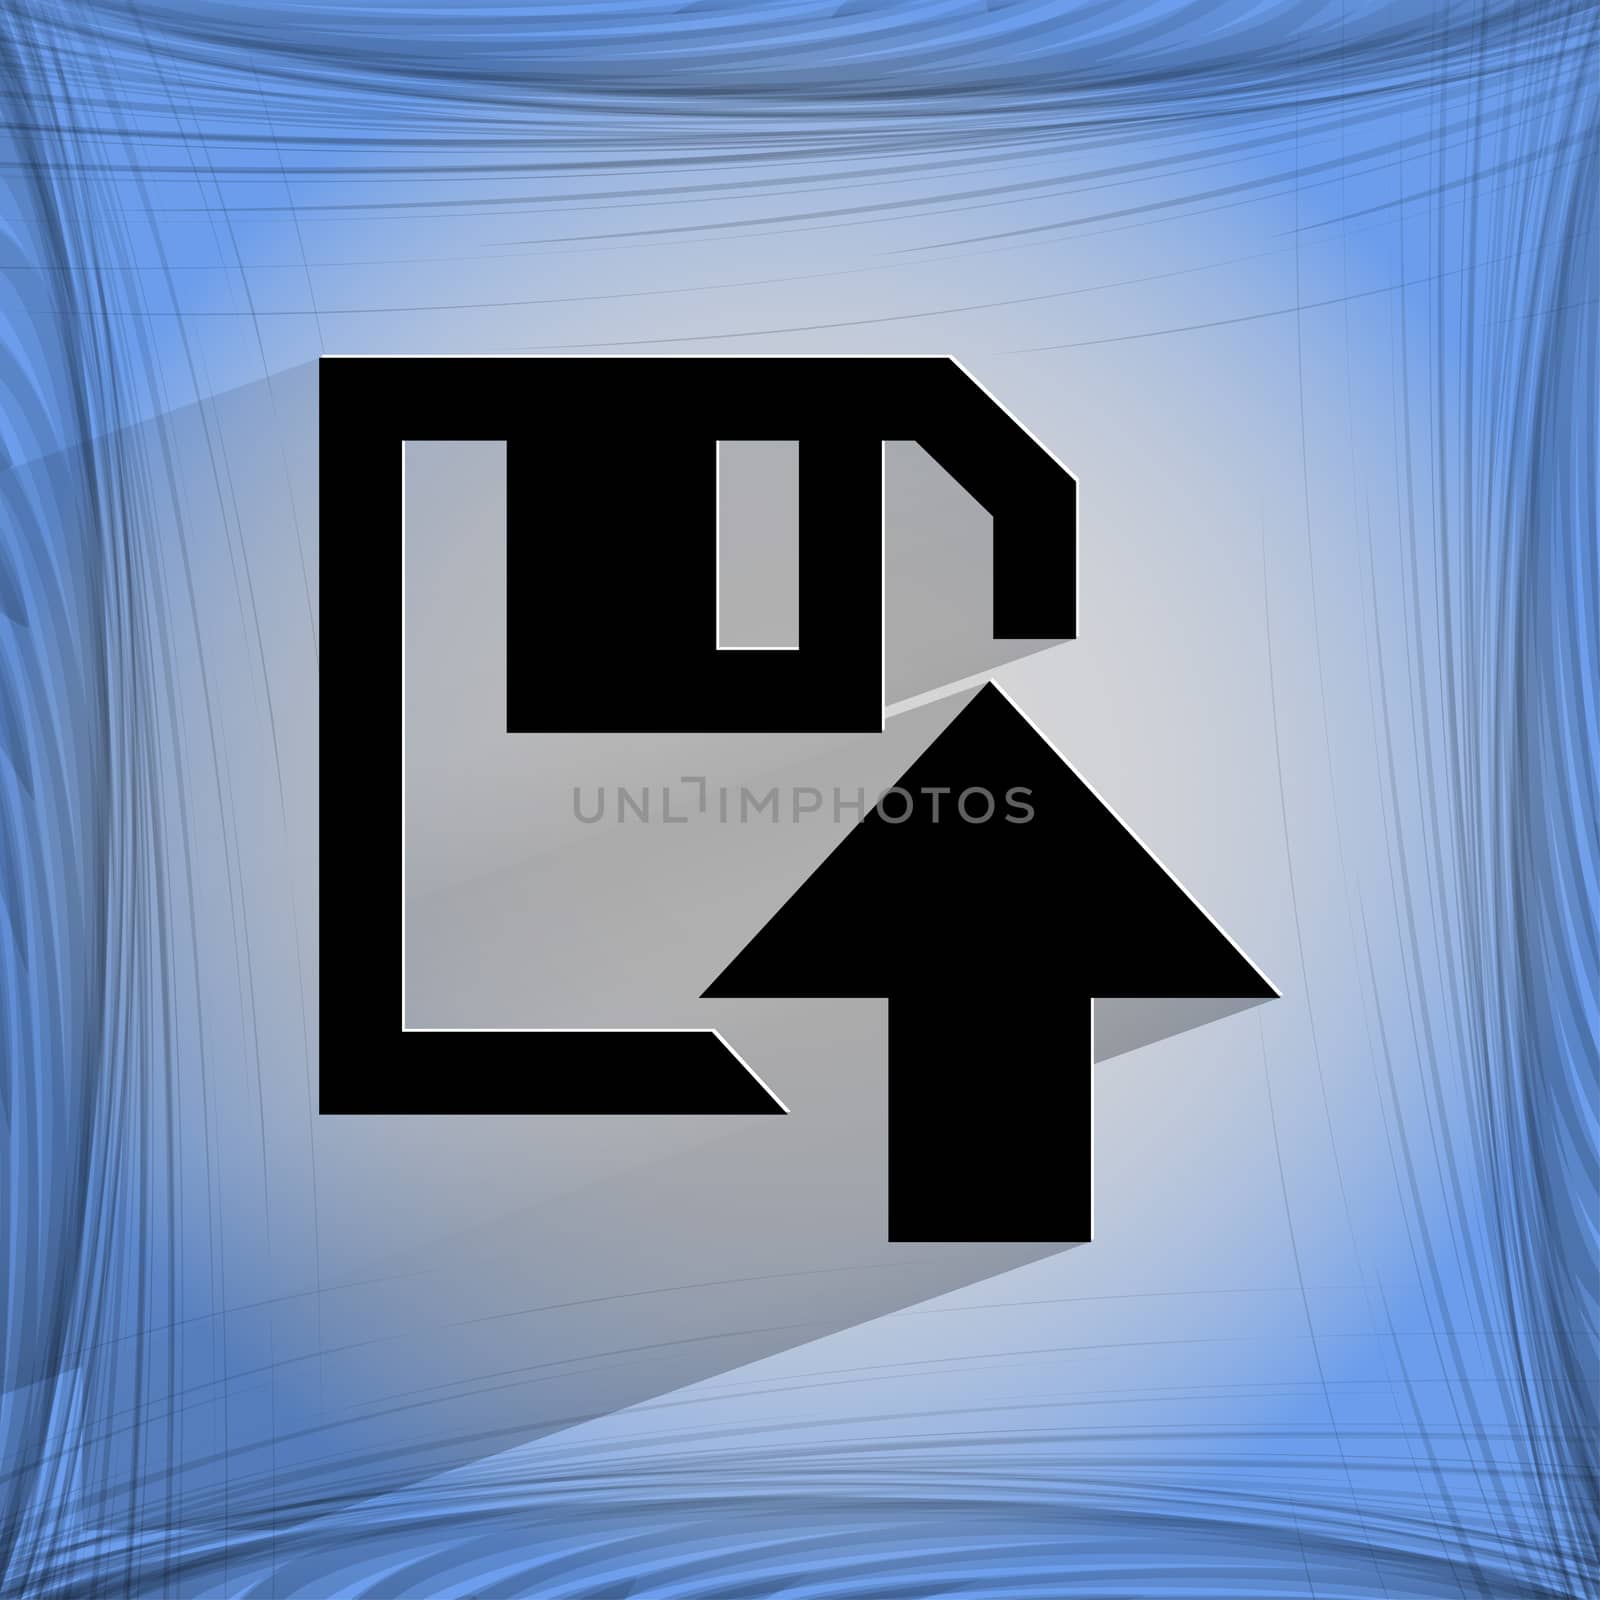 floppy disk upload,  Flat modern web design on a flat geometric abstract background  by serhii_lohvyniuk